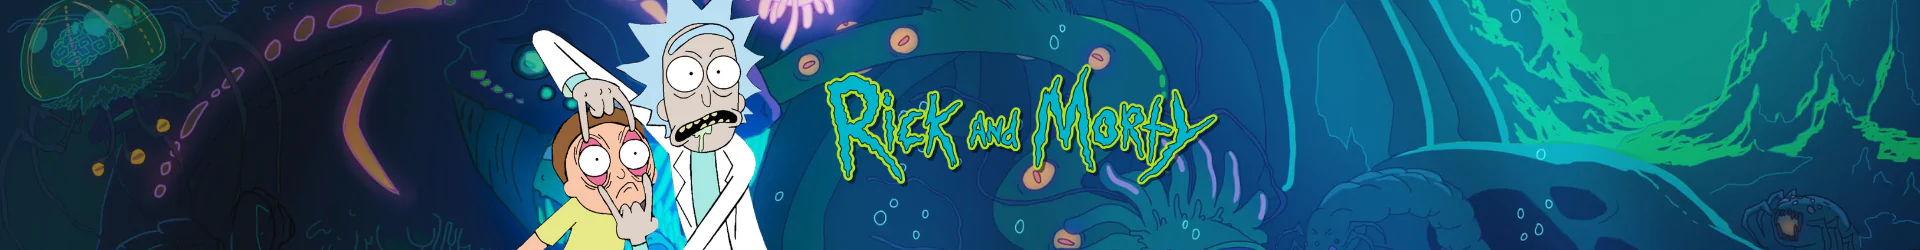 Rick and Morty mugs banner